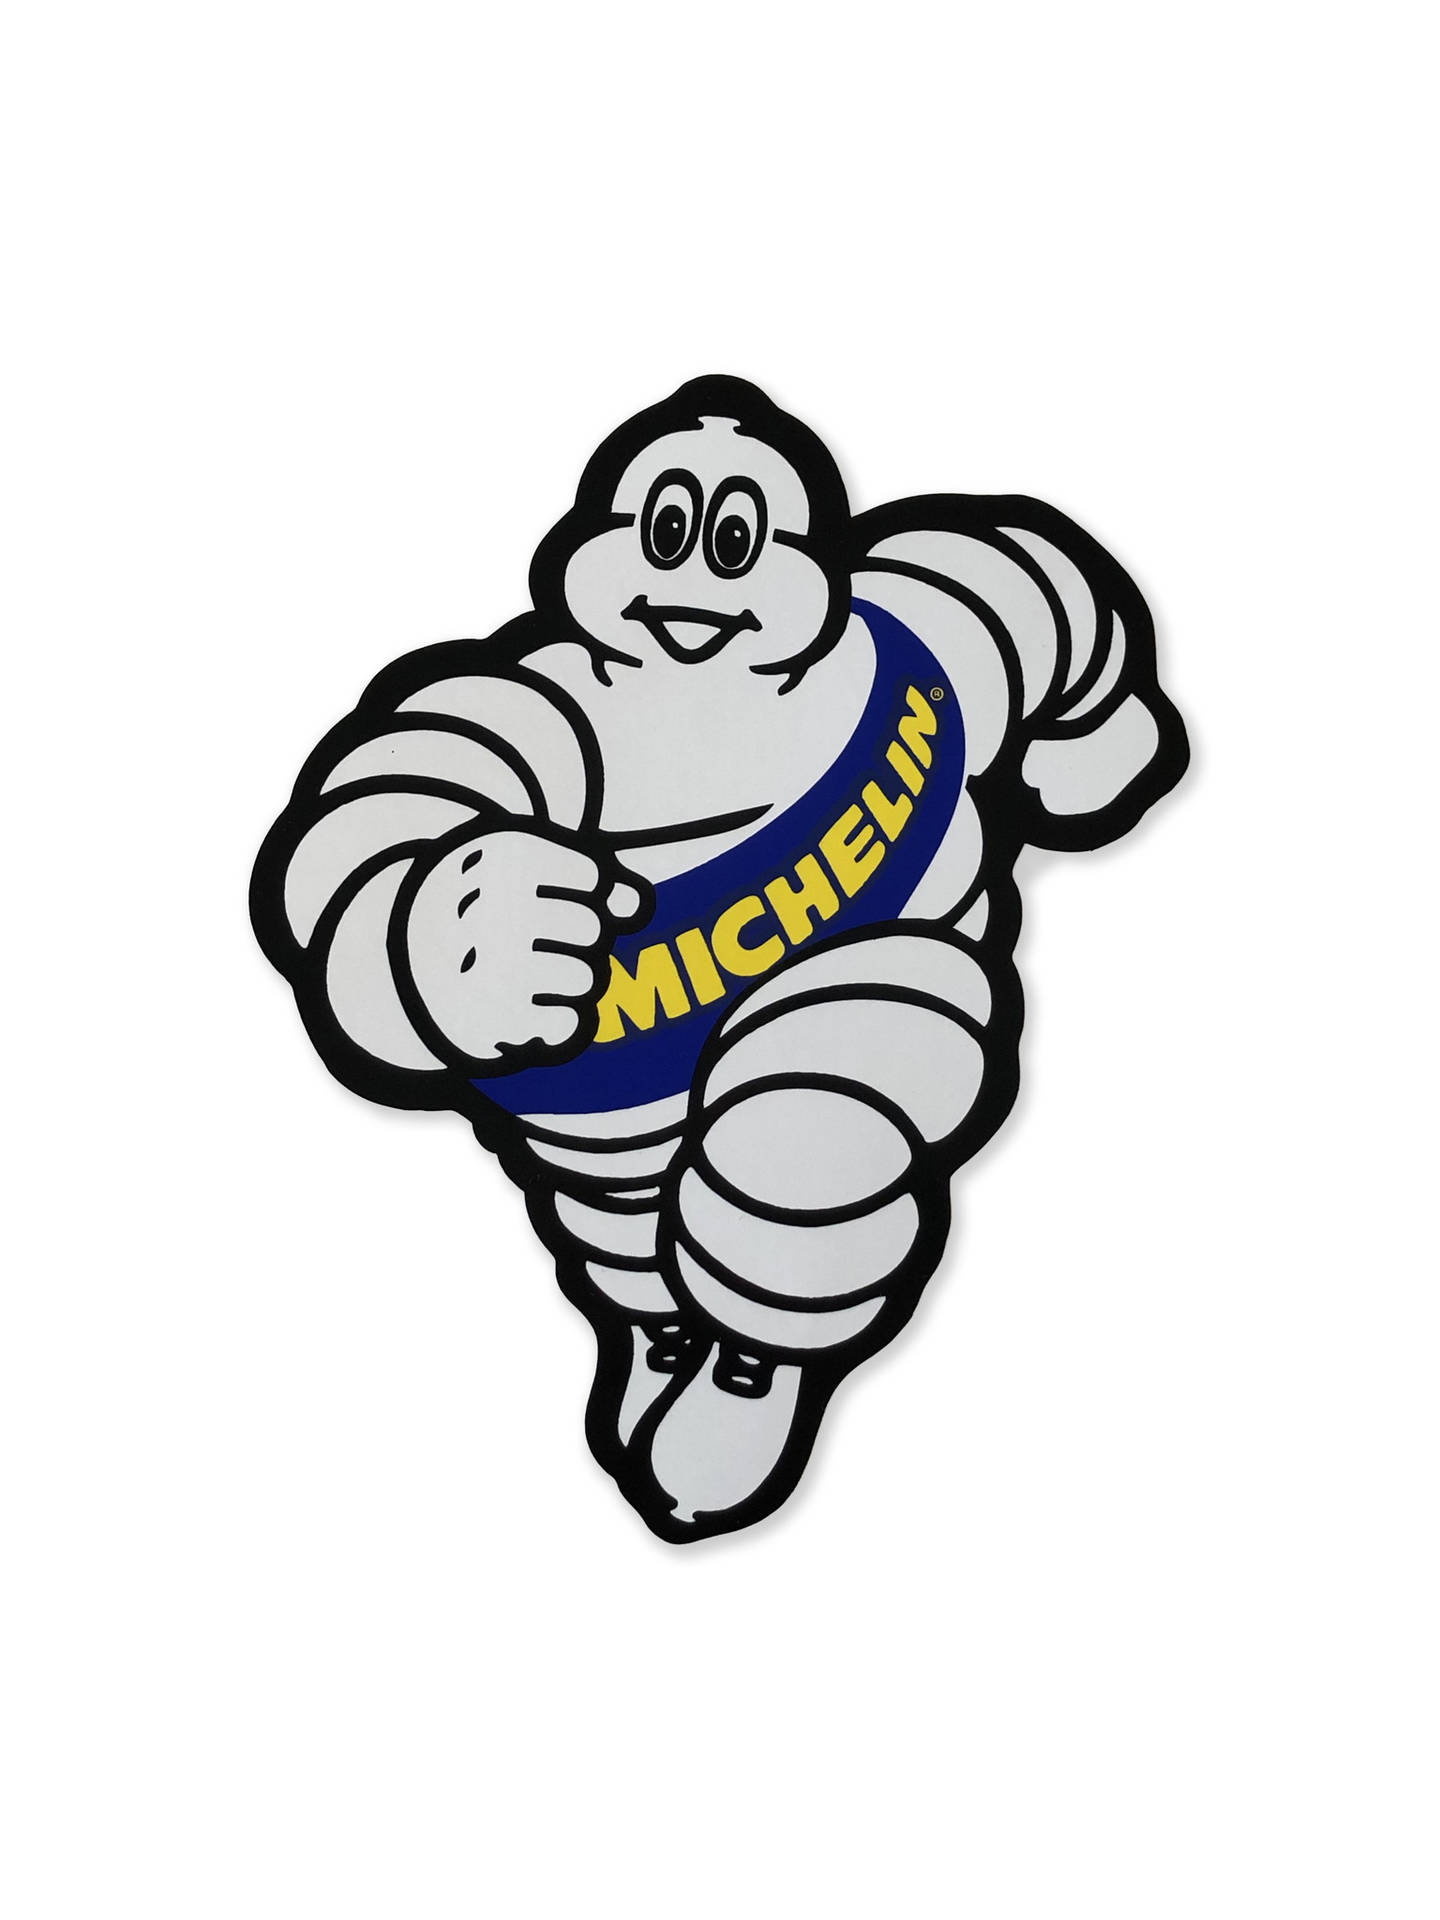 Cute Michelin Mascot Wallpaper